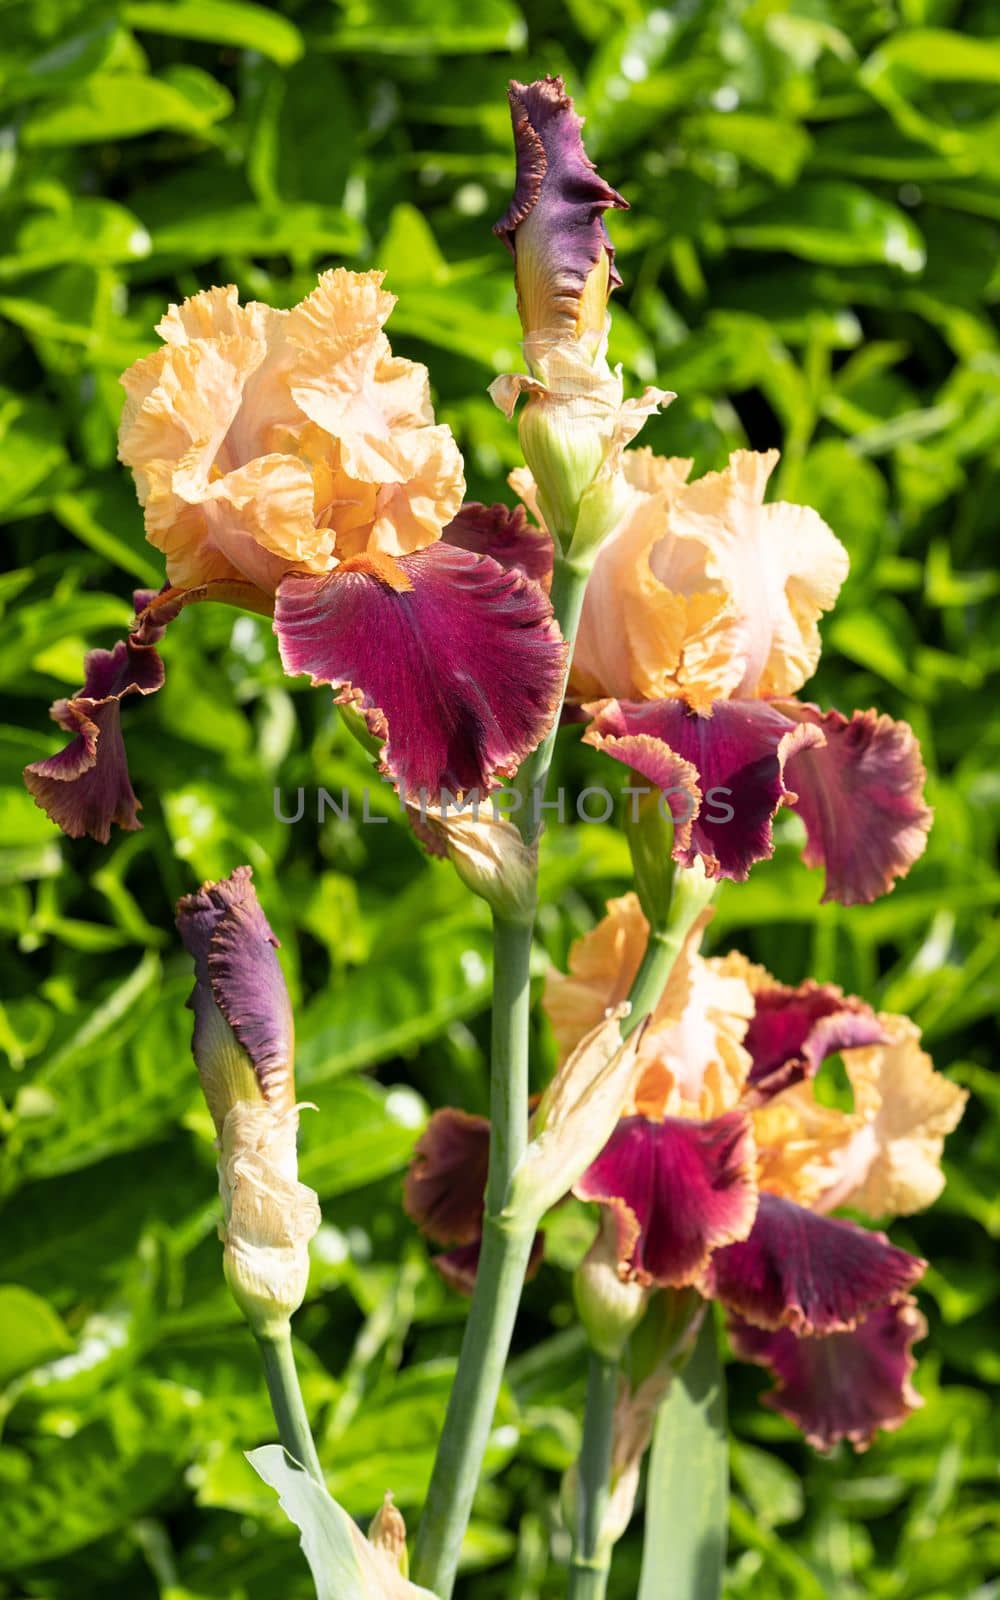 German iris (Iris barbata), close up image of the flower head